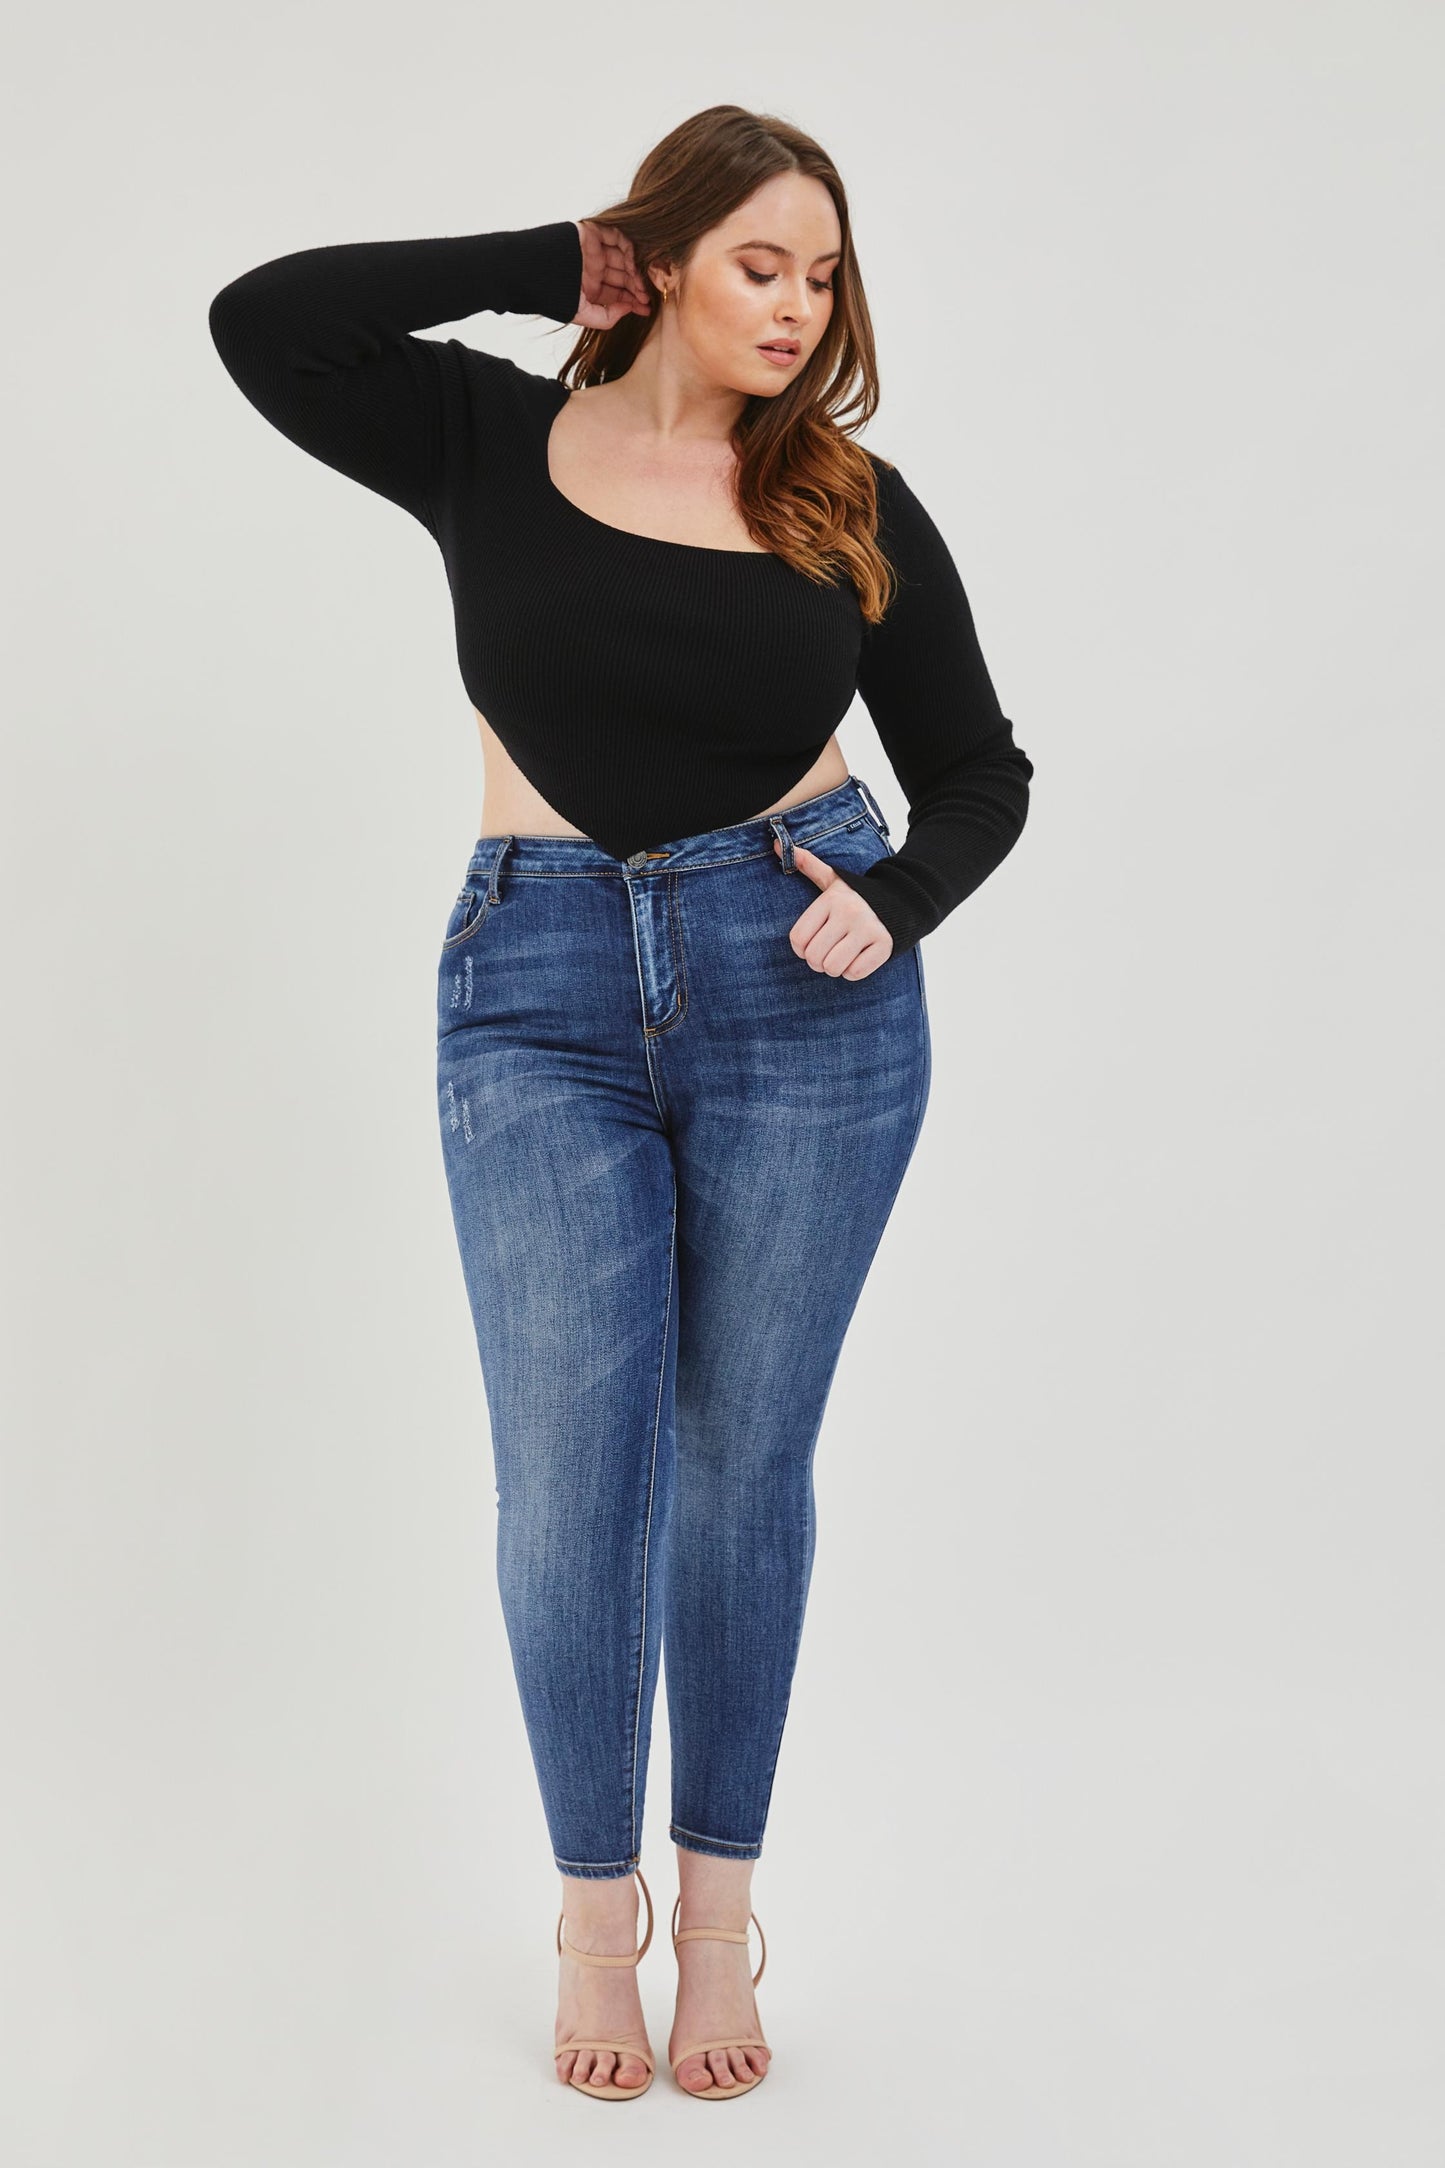 Le jean fashion taille haute #2 (14-22)